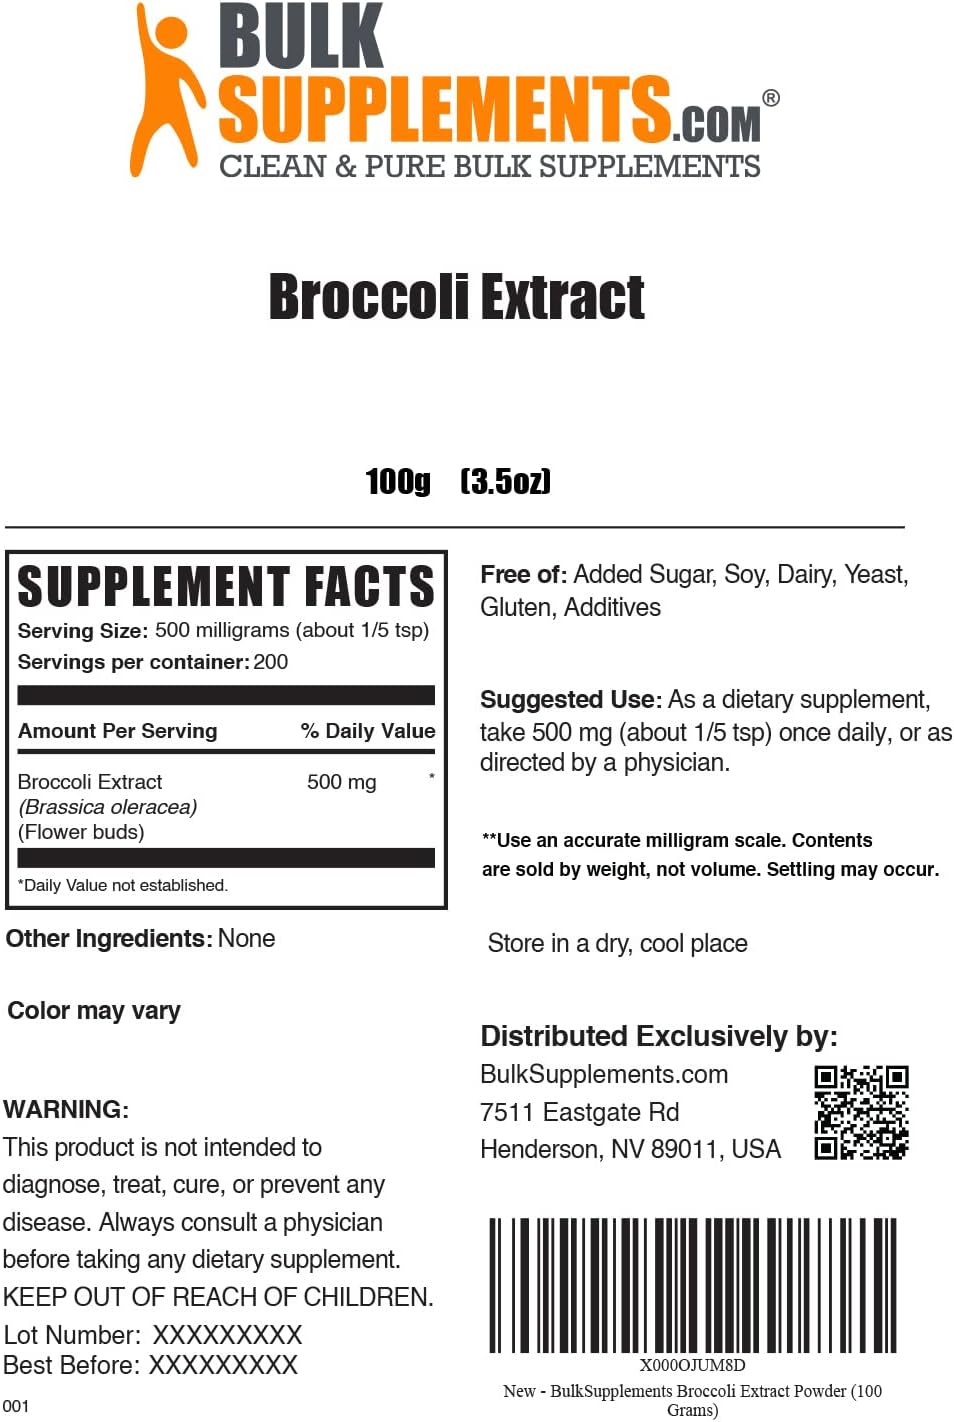 Bulk Supplements Broccoli Extract Powder Sulforaphane 100Gr.